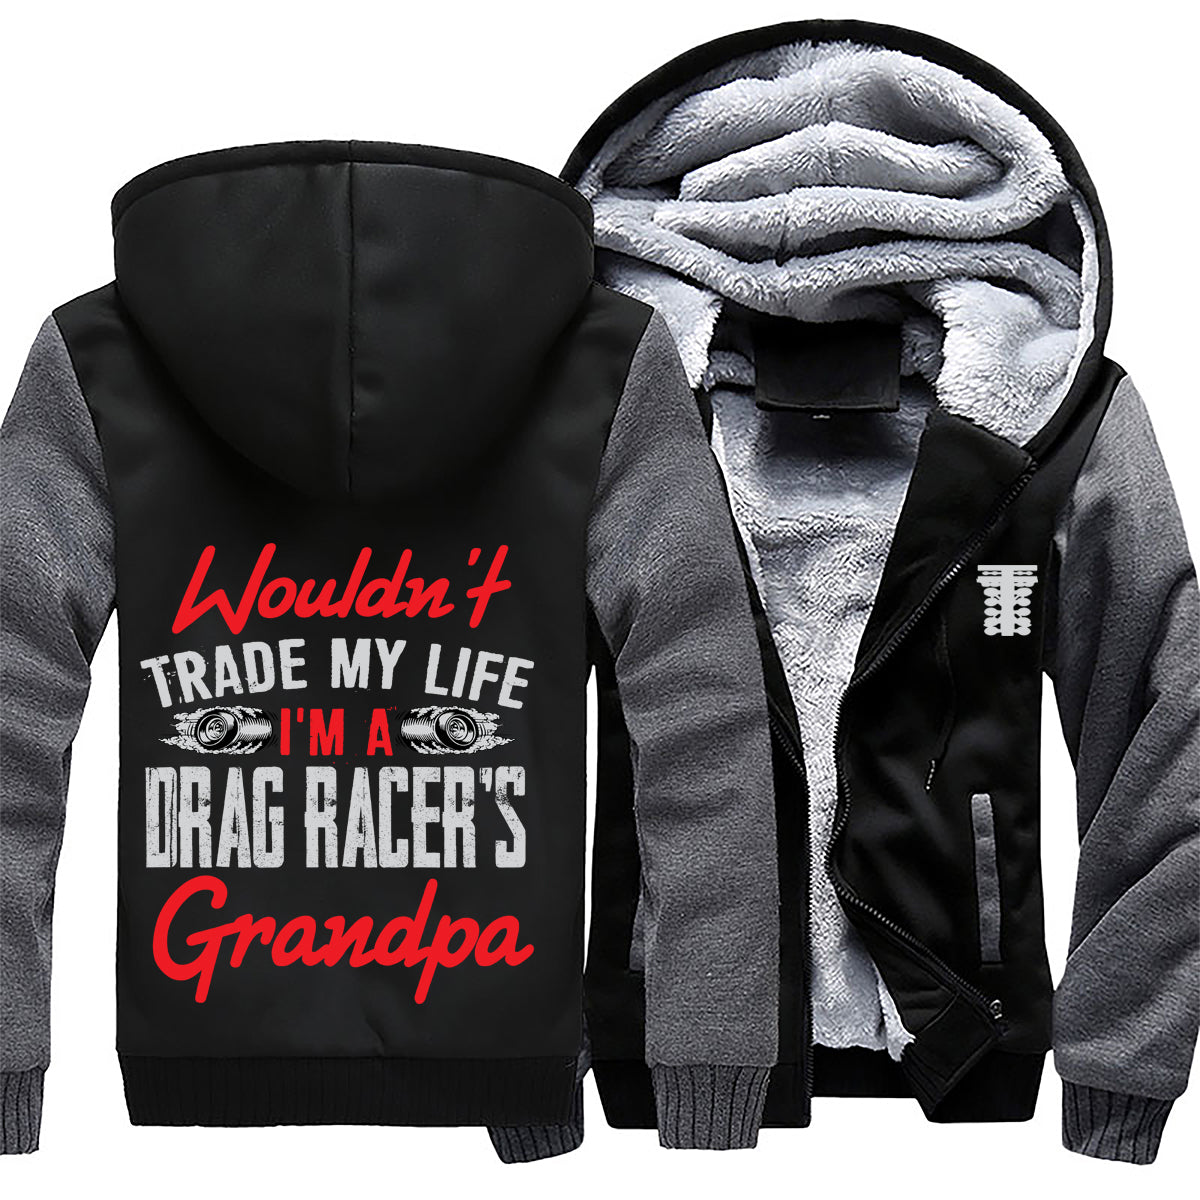 I'm A Drag Racer's Grandpa Jacket